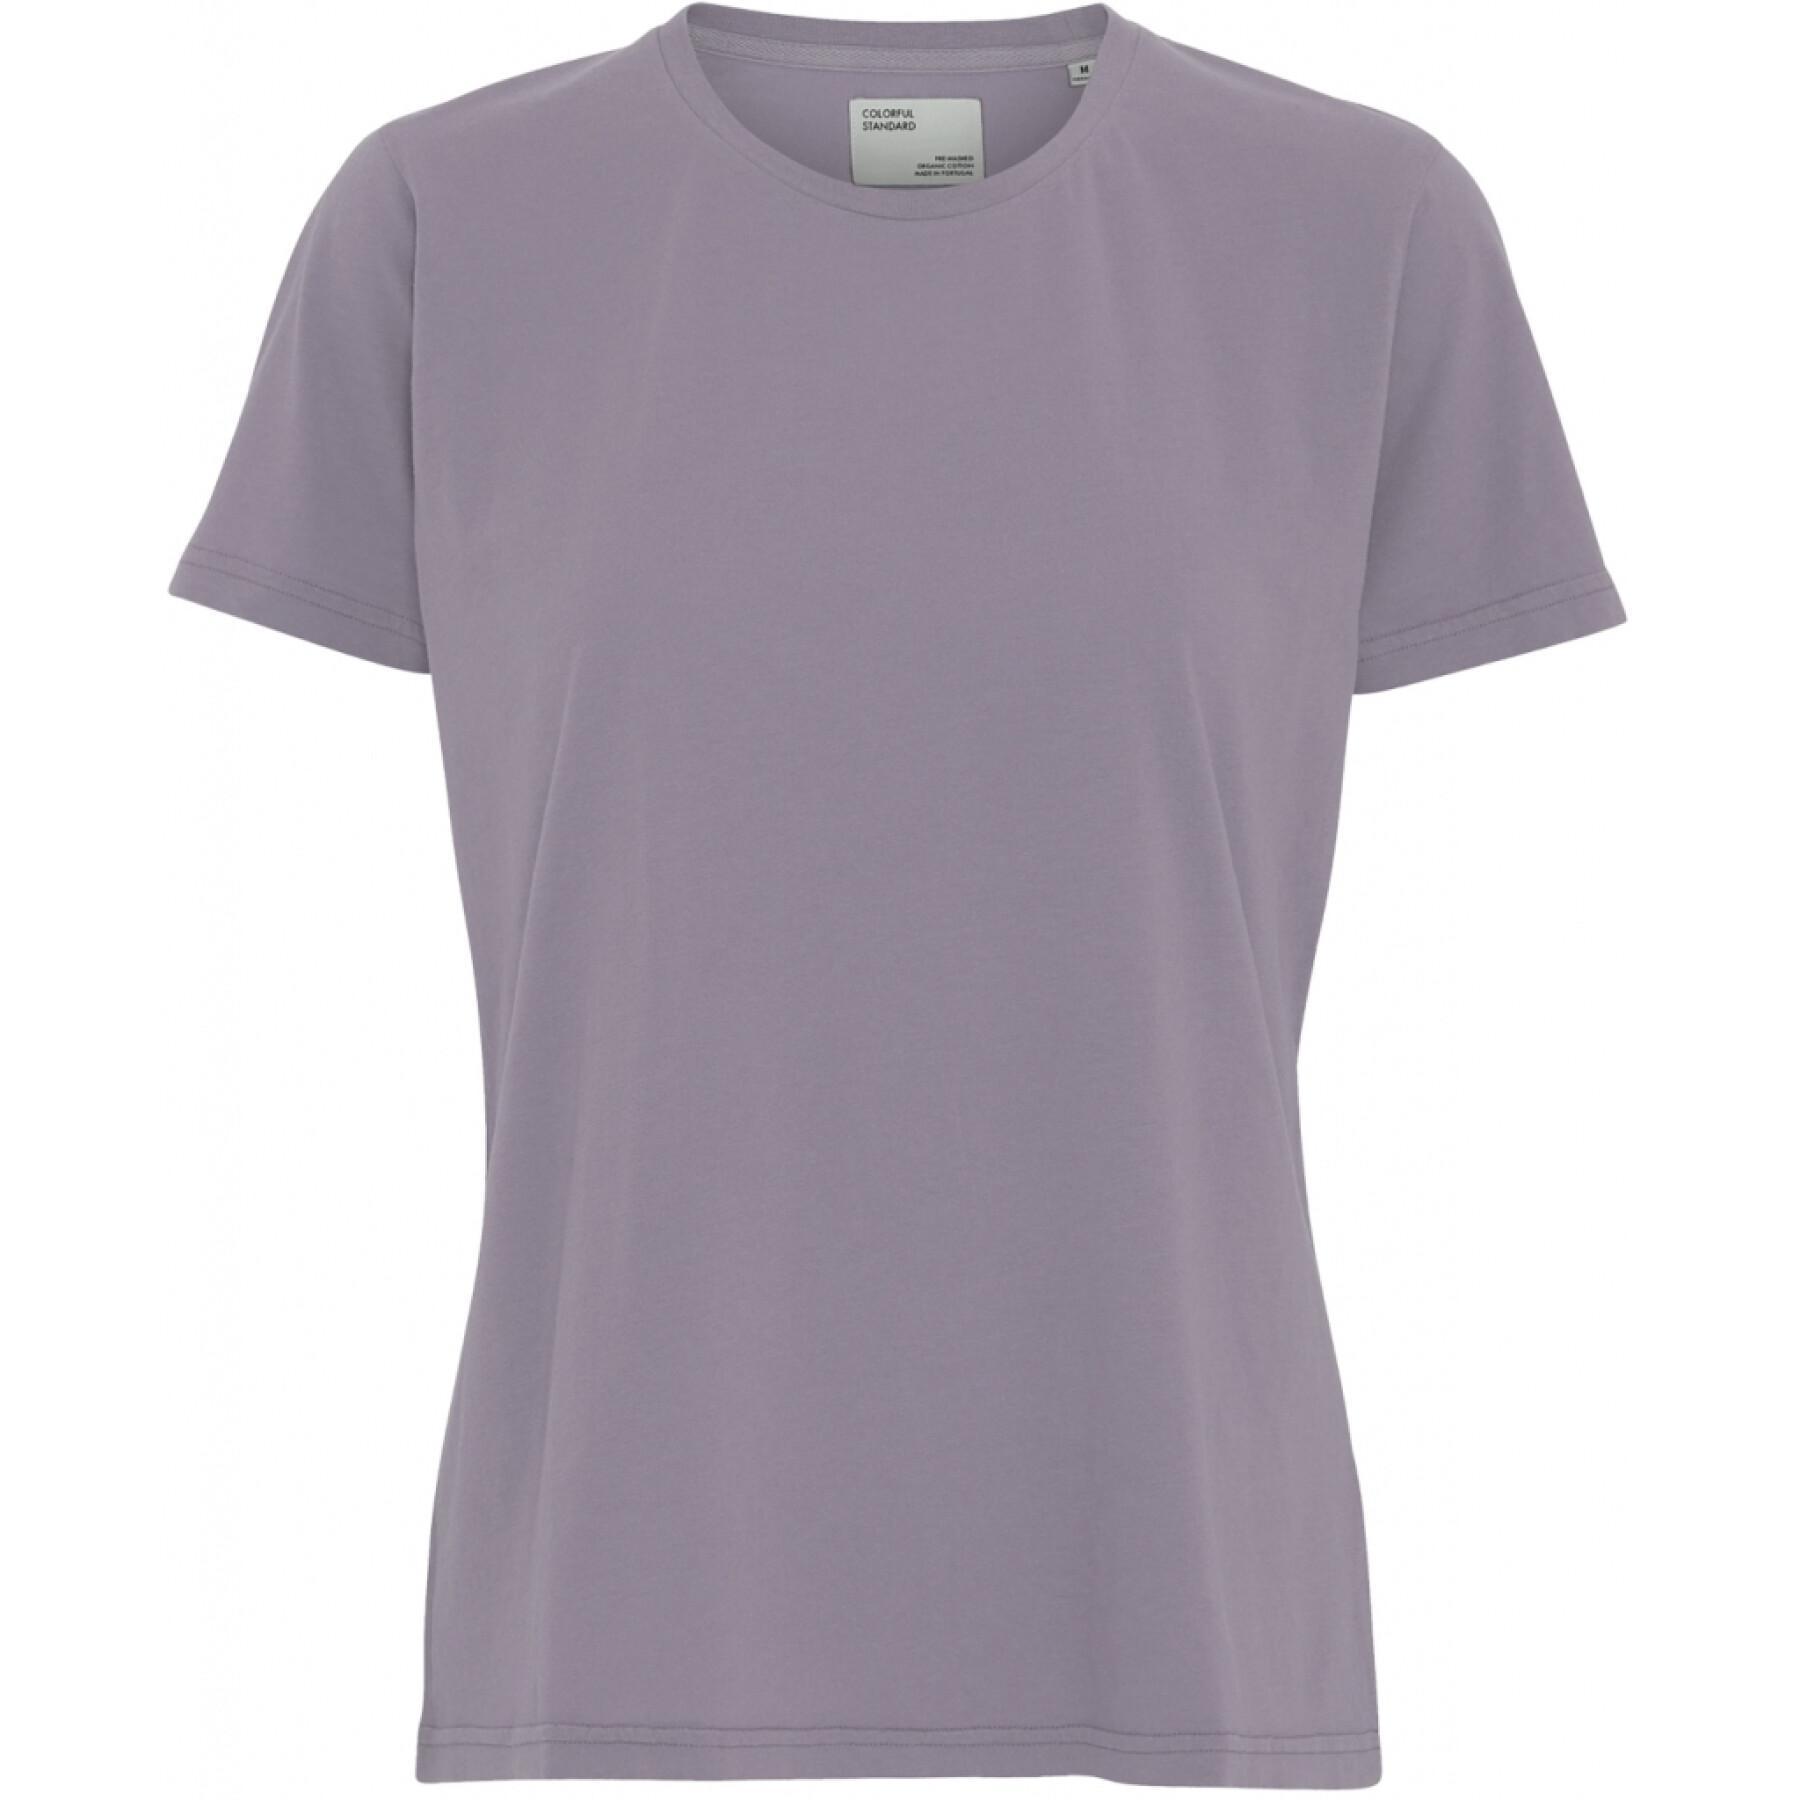 Dames-T-shirt Colorful Standard Light Organic purple haze